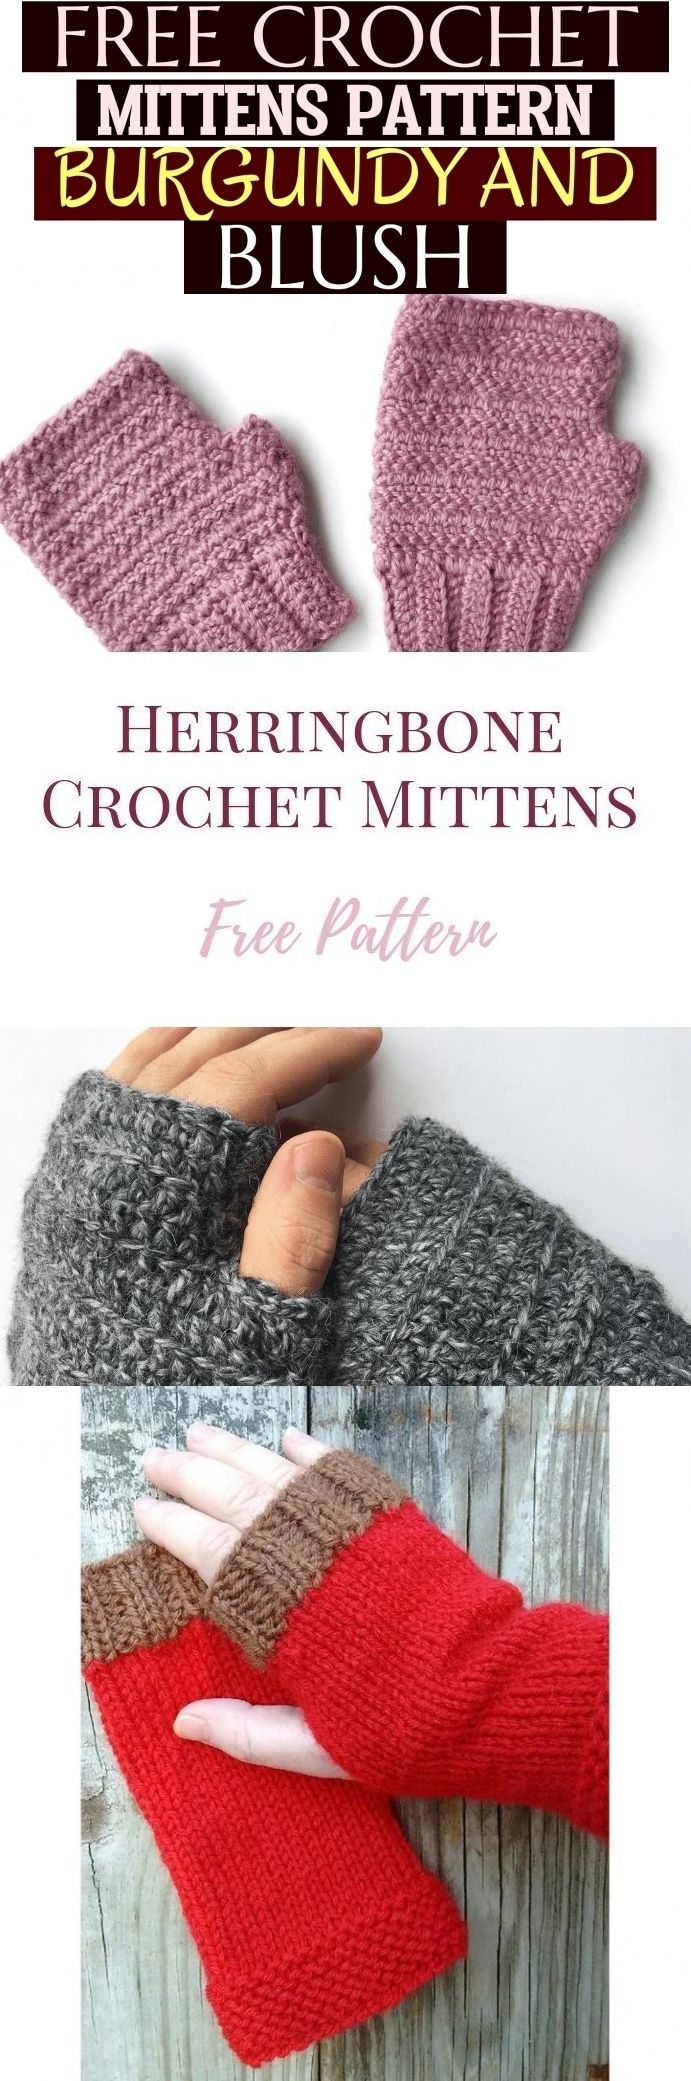 Free-Crochet-Mittens-Pattern-Burgundy-And-Blush-haekeln.jpg